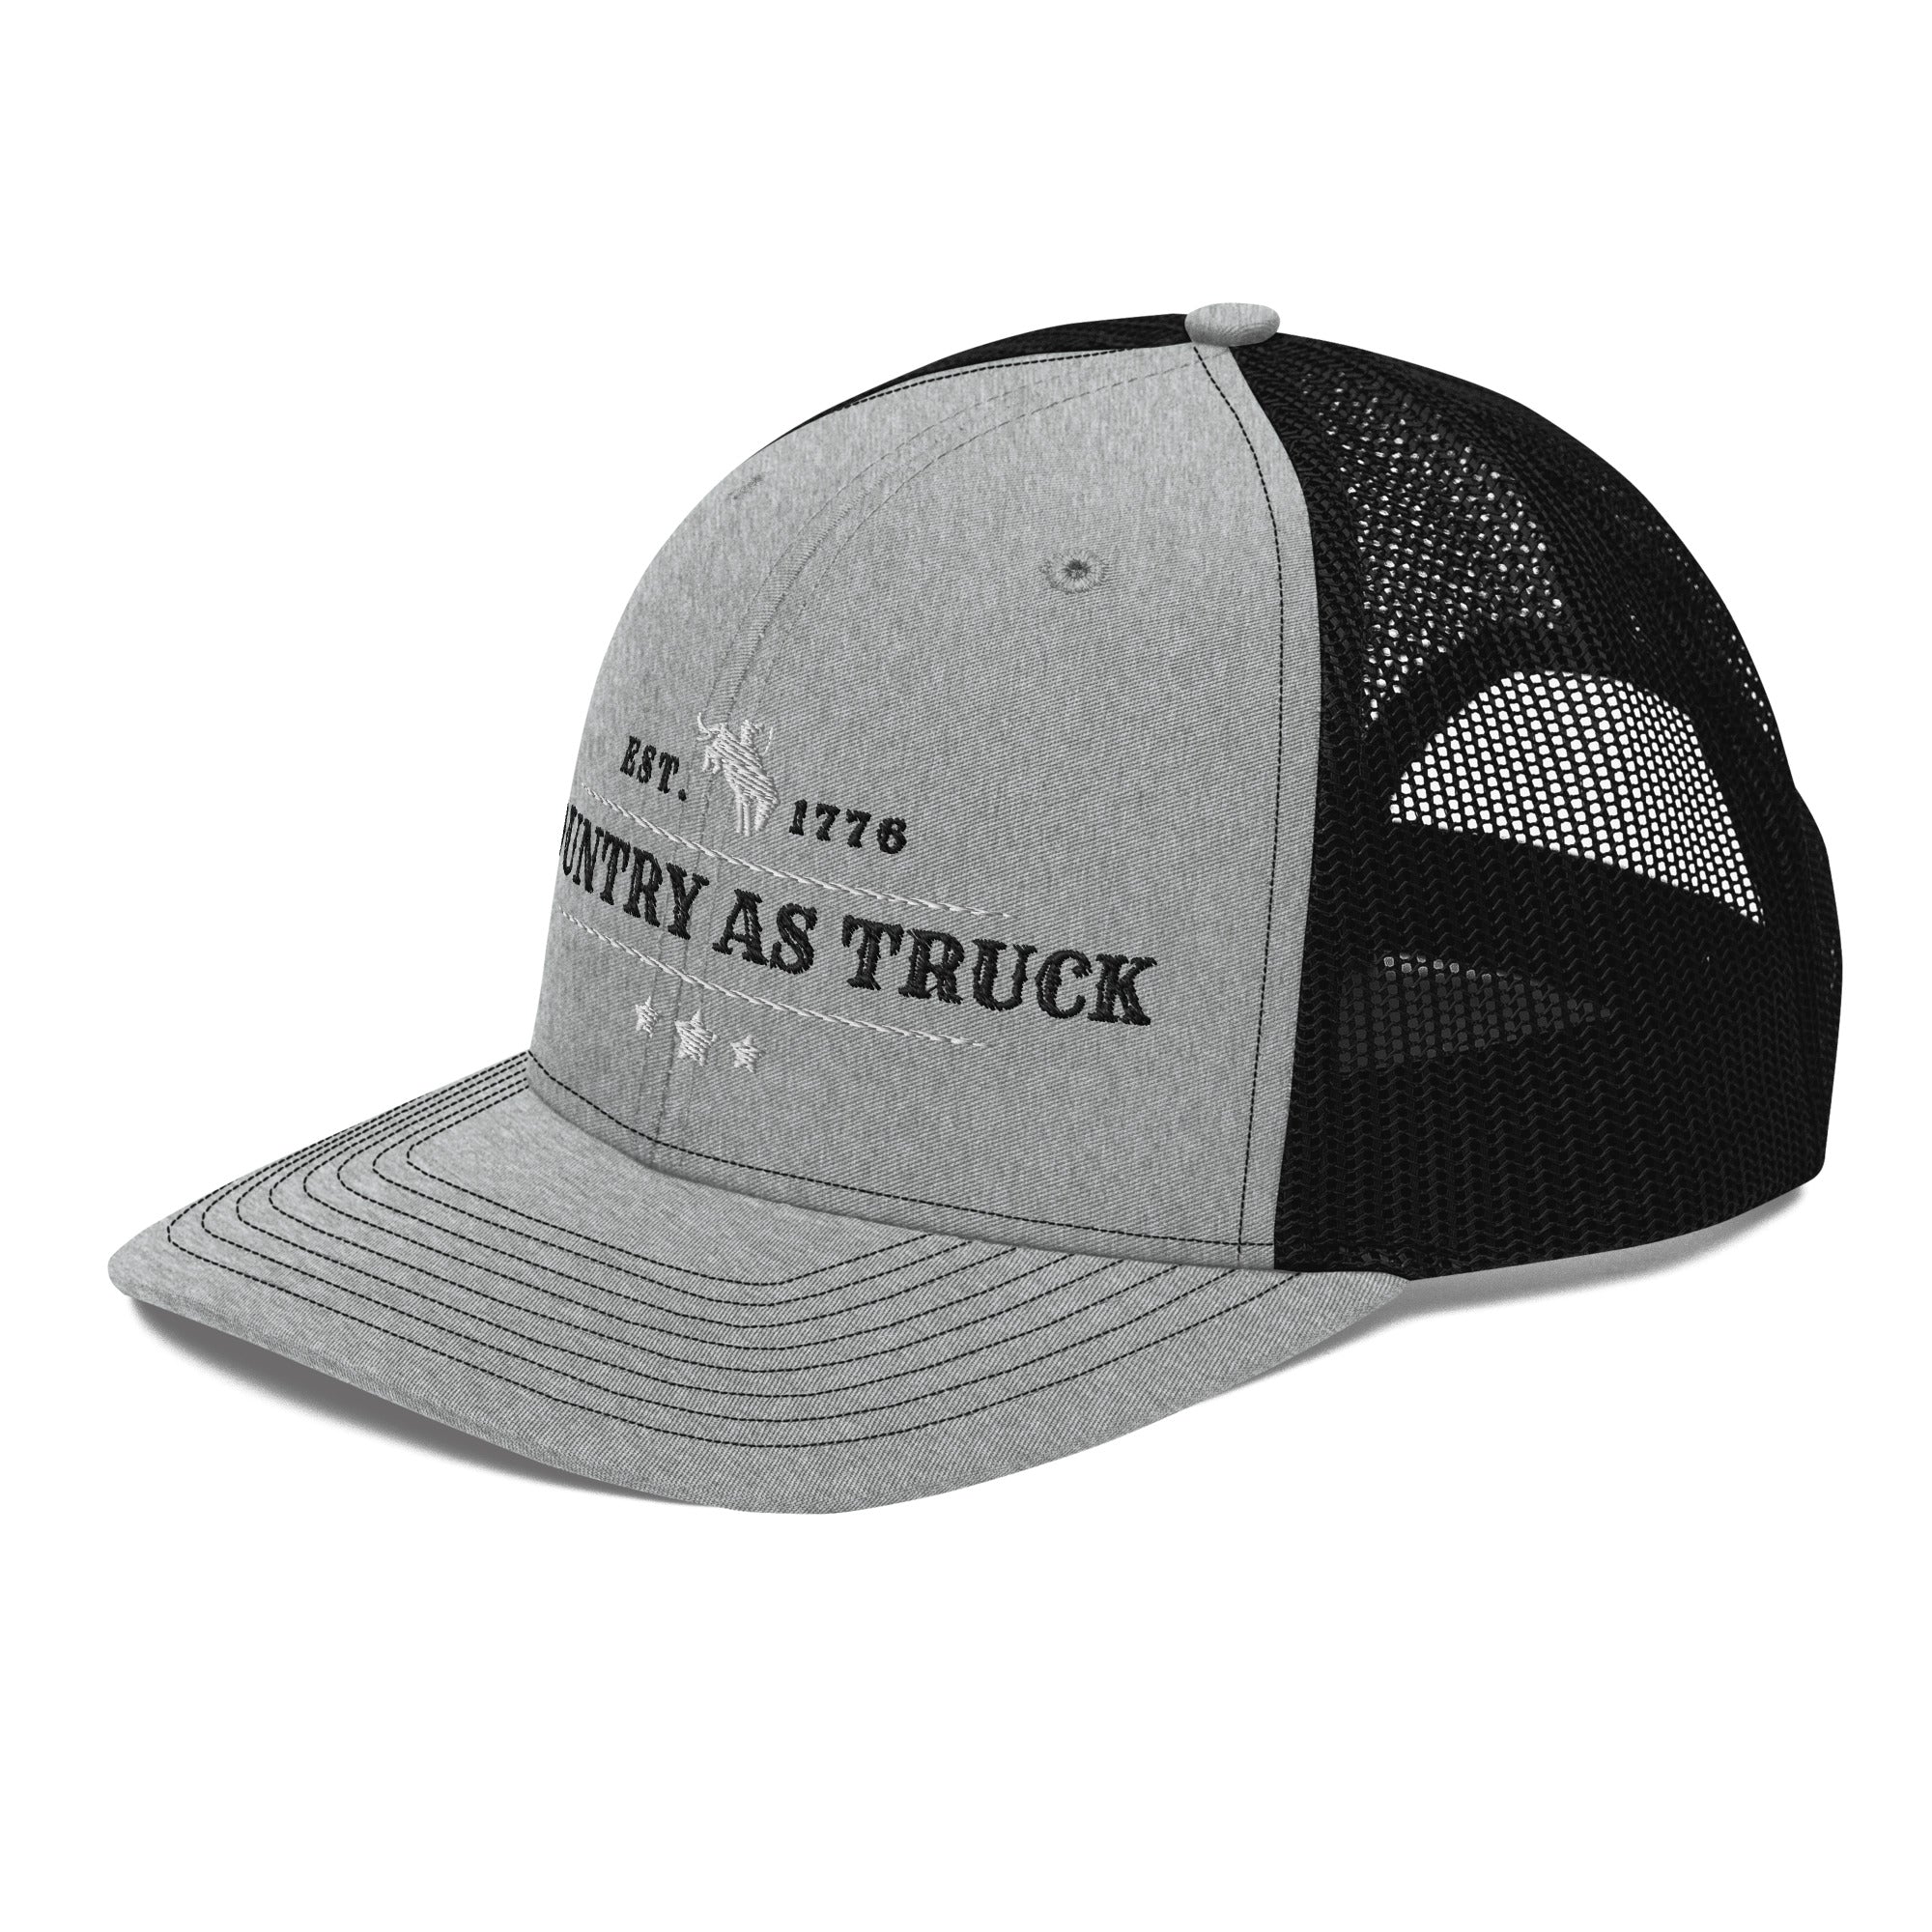 Country As Truck Trucker Cap